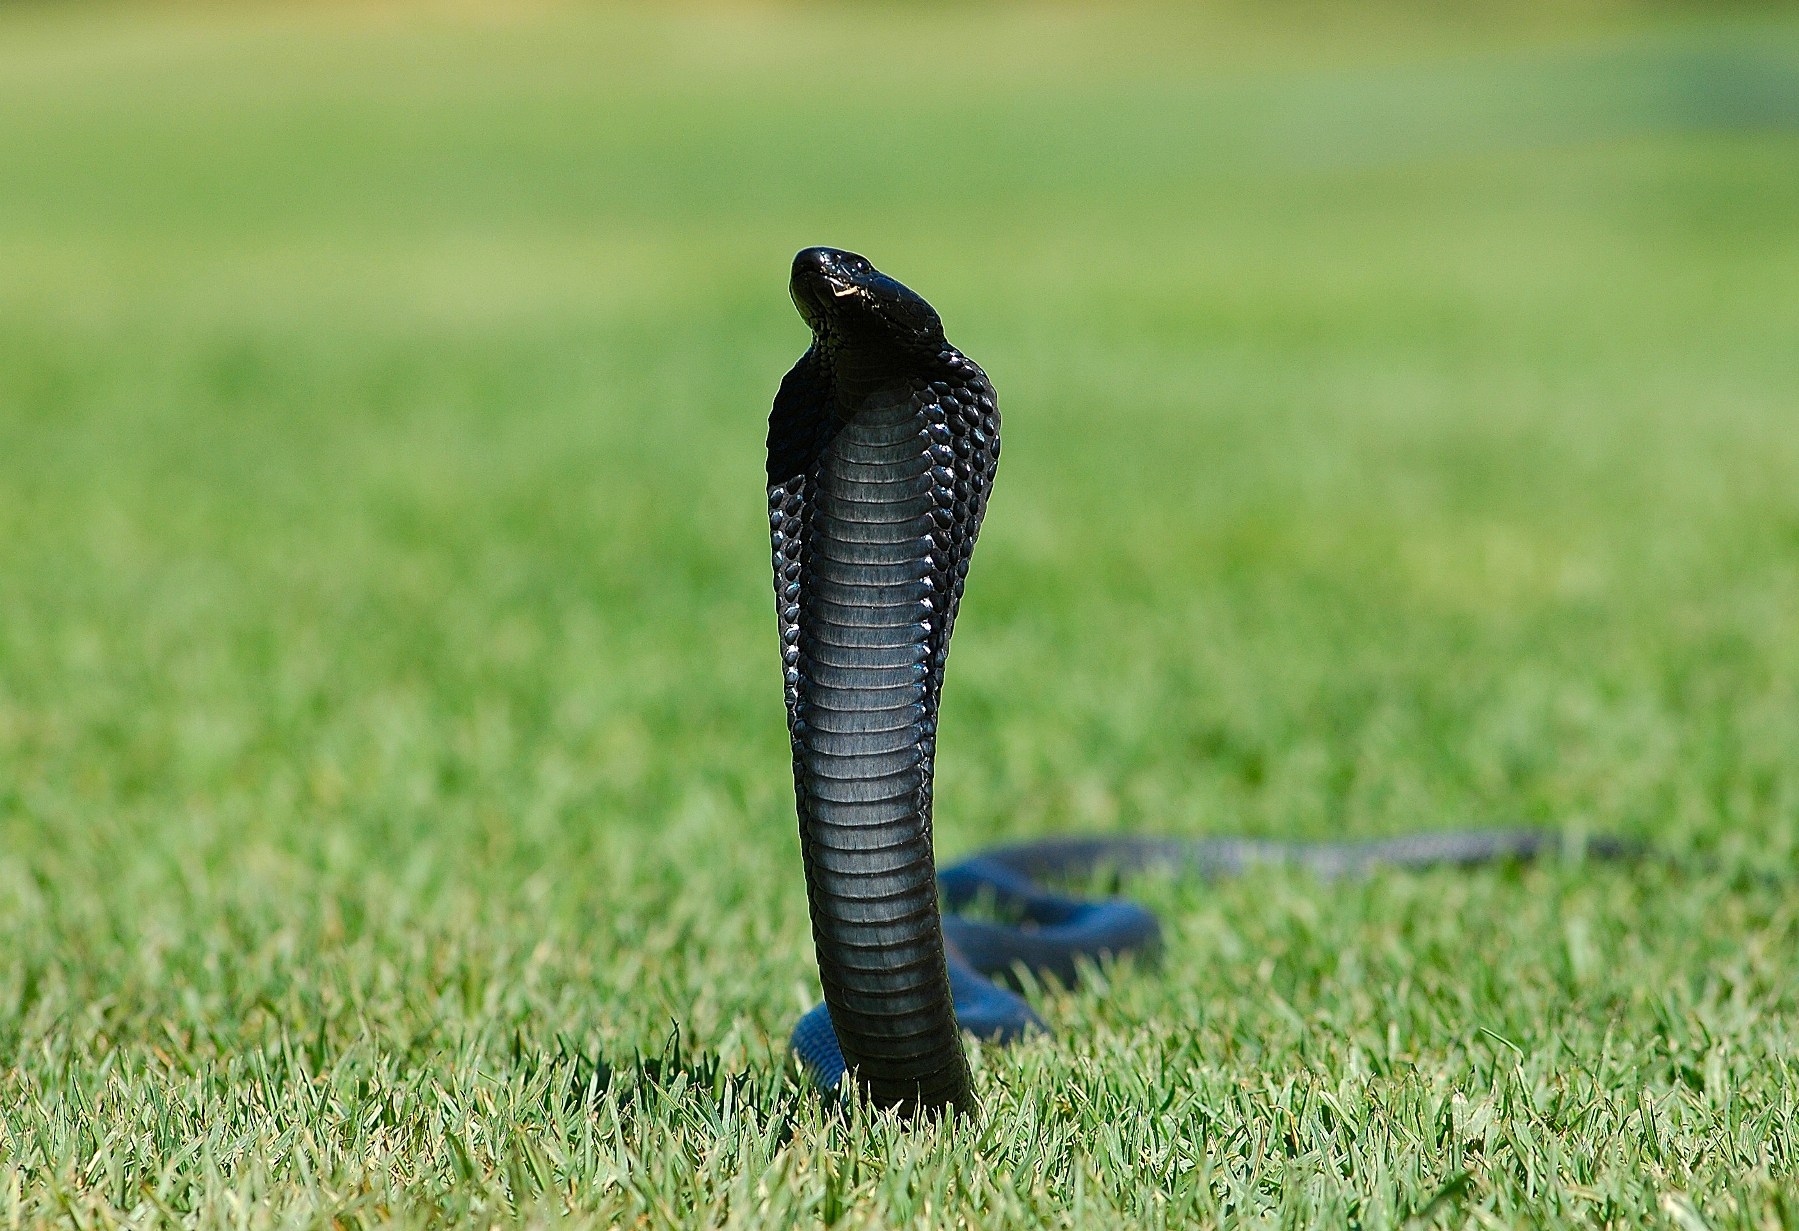 Black Spitting Cobra